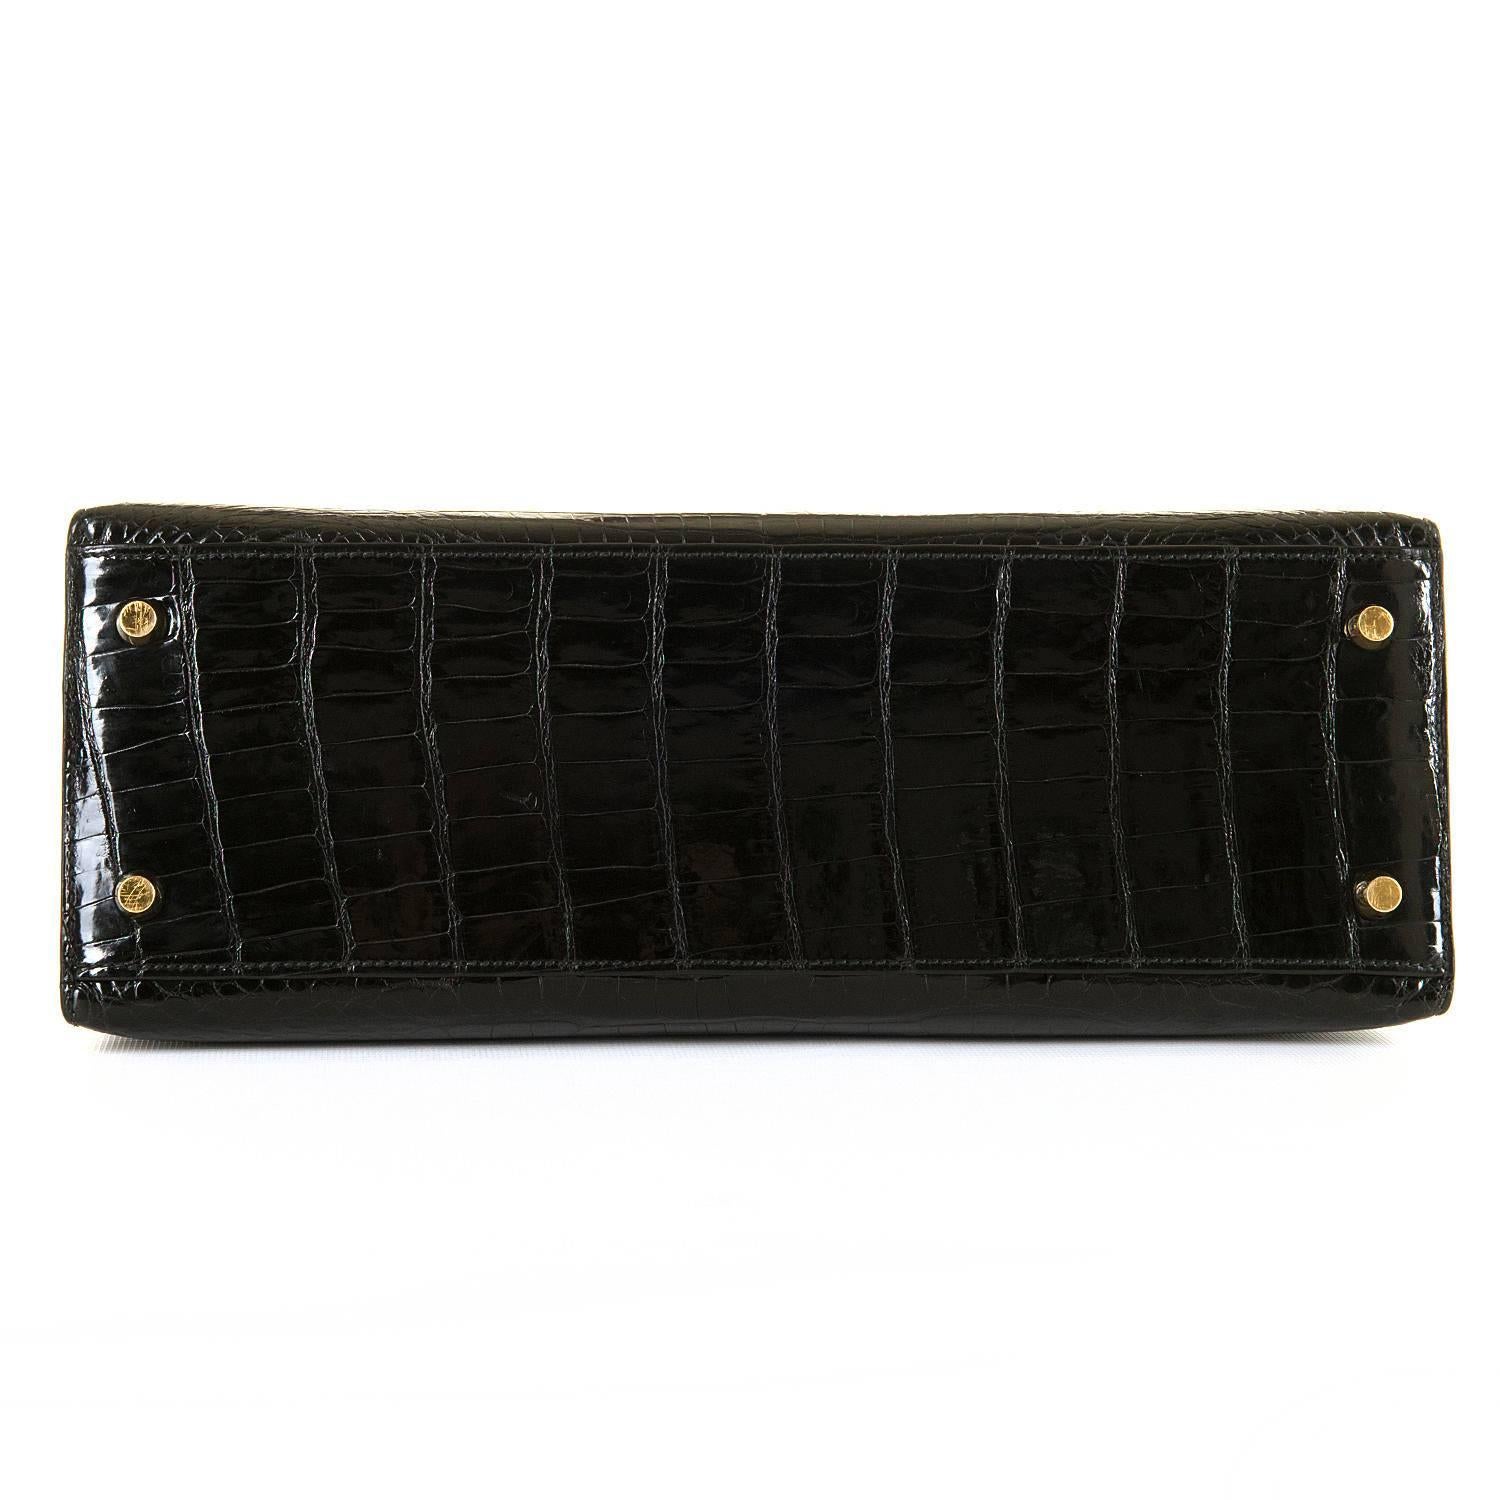 Women's AS NEW Hermes 32cm Black Porous Crocodile Kelly Bag with Gold Hardware